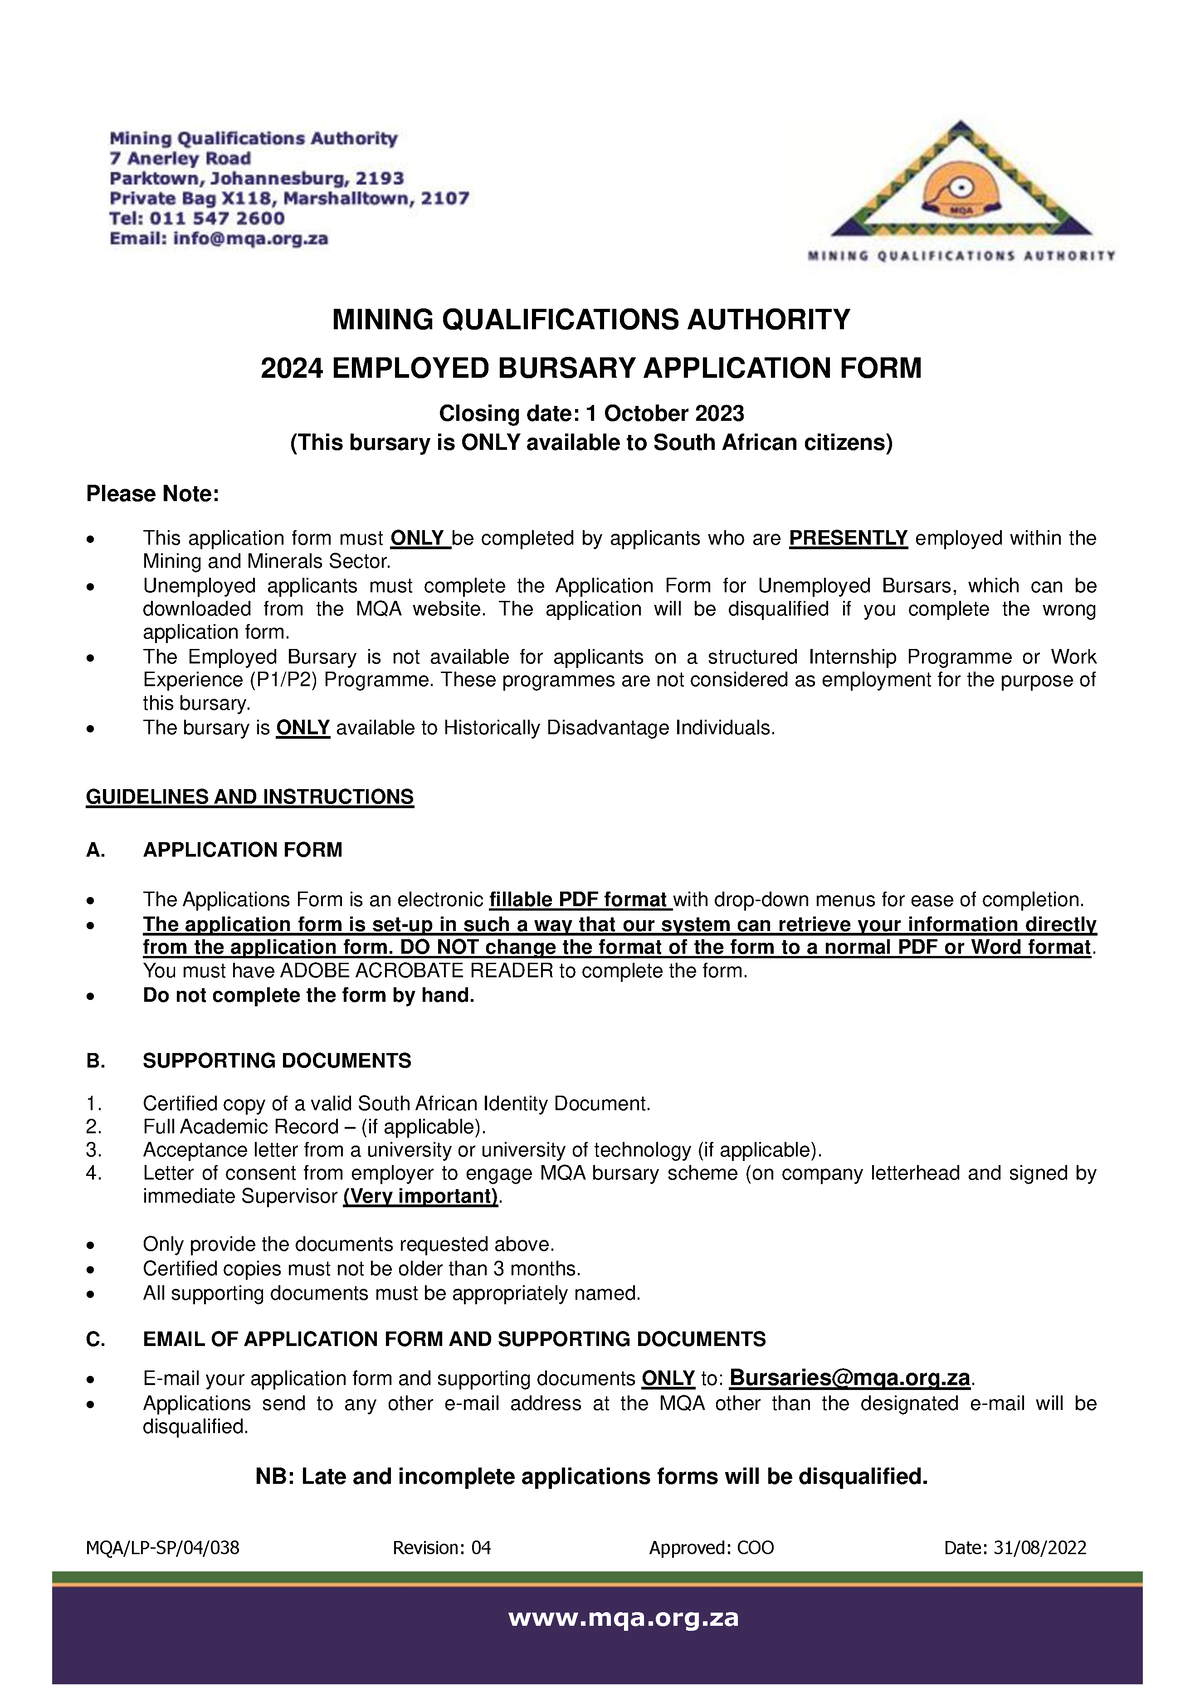 2024 Employed Bursary Application Form - MQA/LP-SP/04/038 Revision: 04 ...